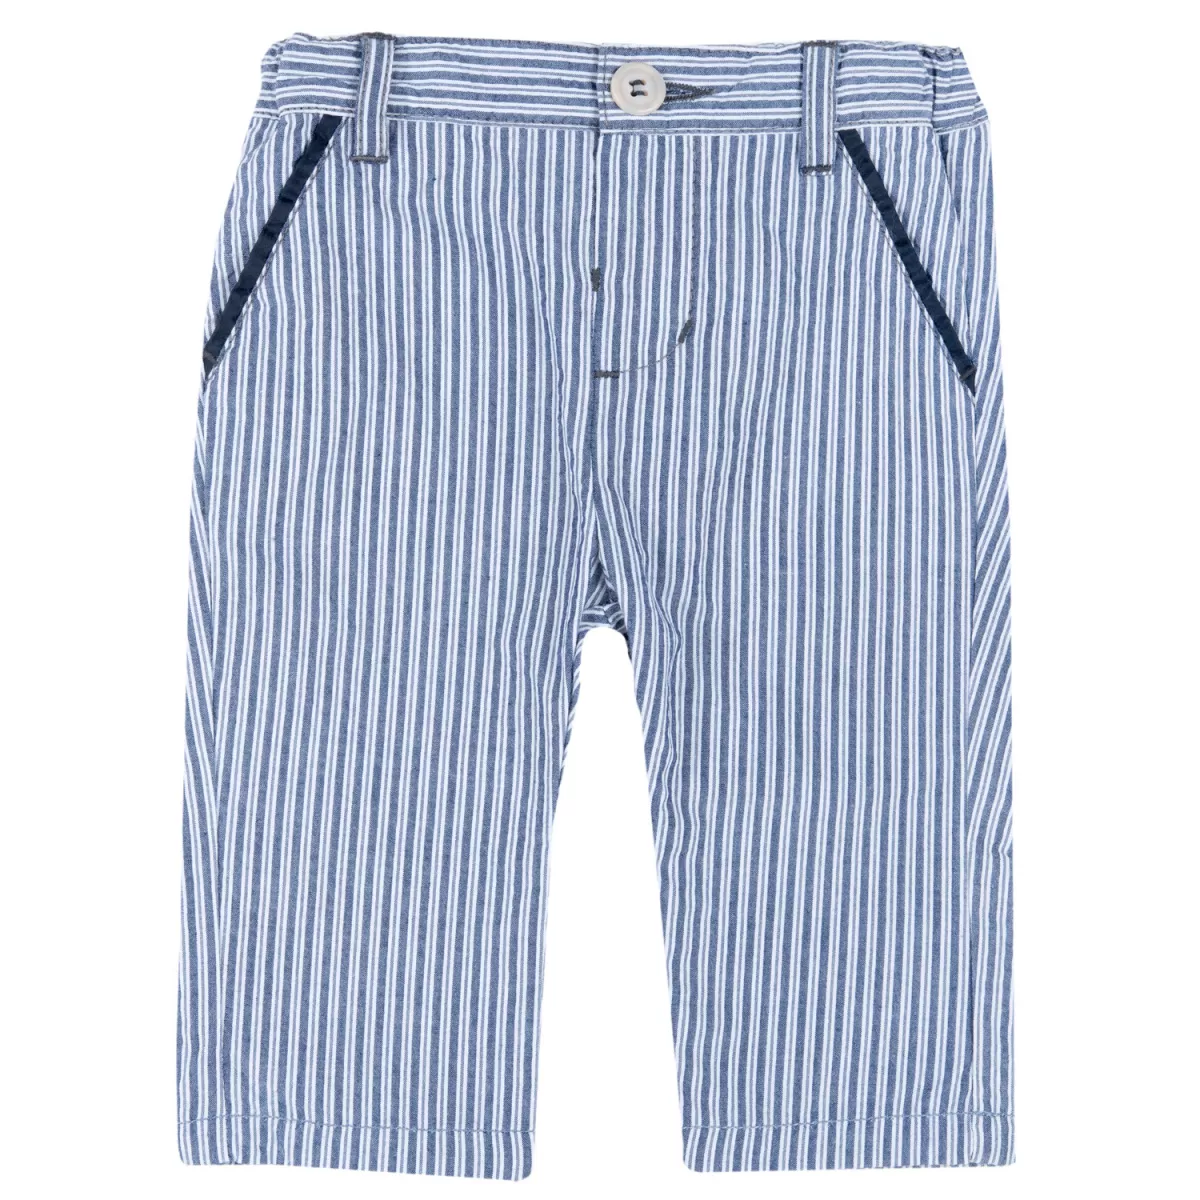 Pantaloni copii Chicco, alb cu albastru, 08431, 86